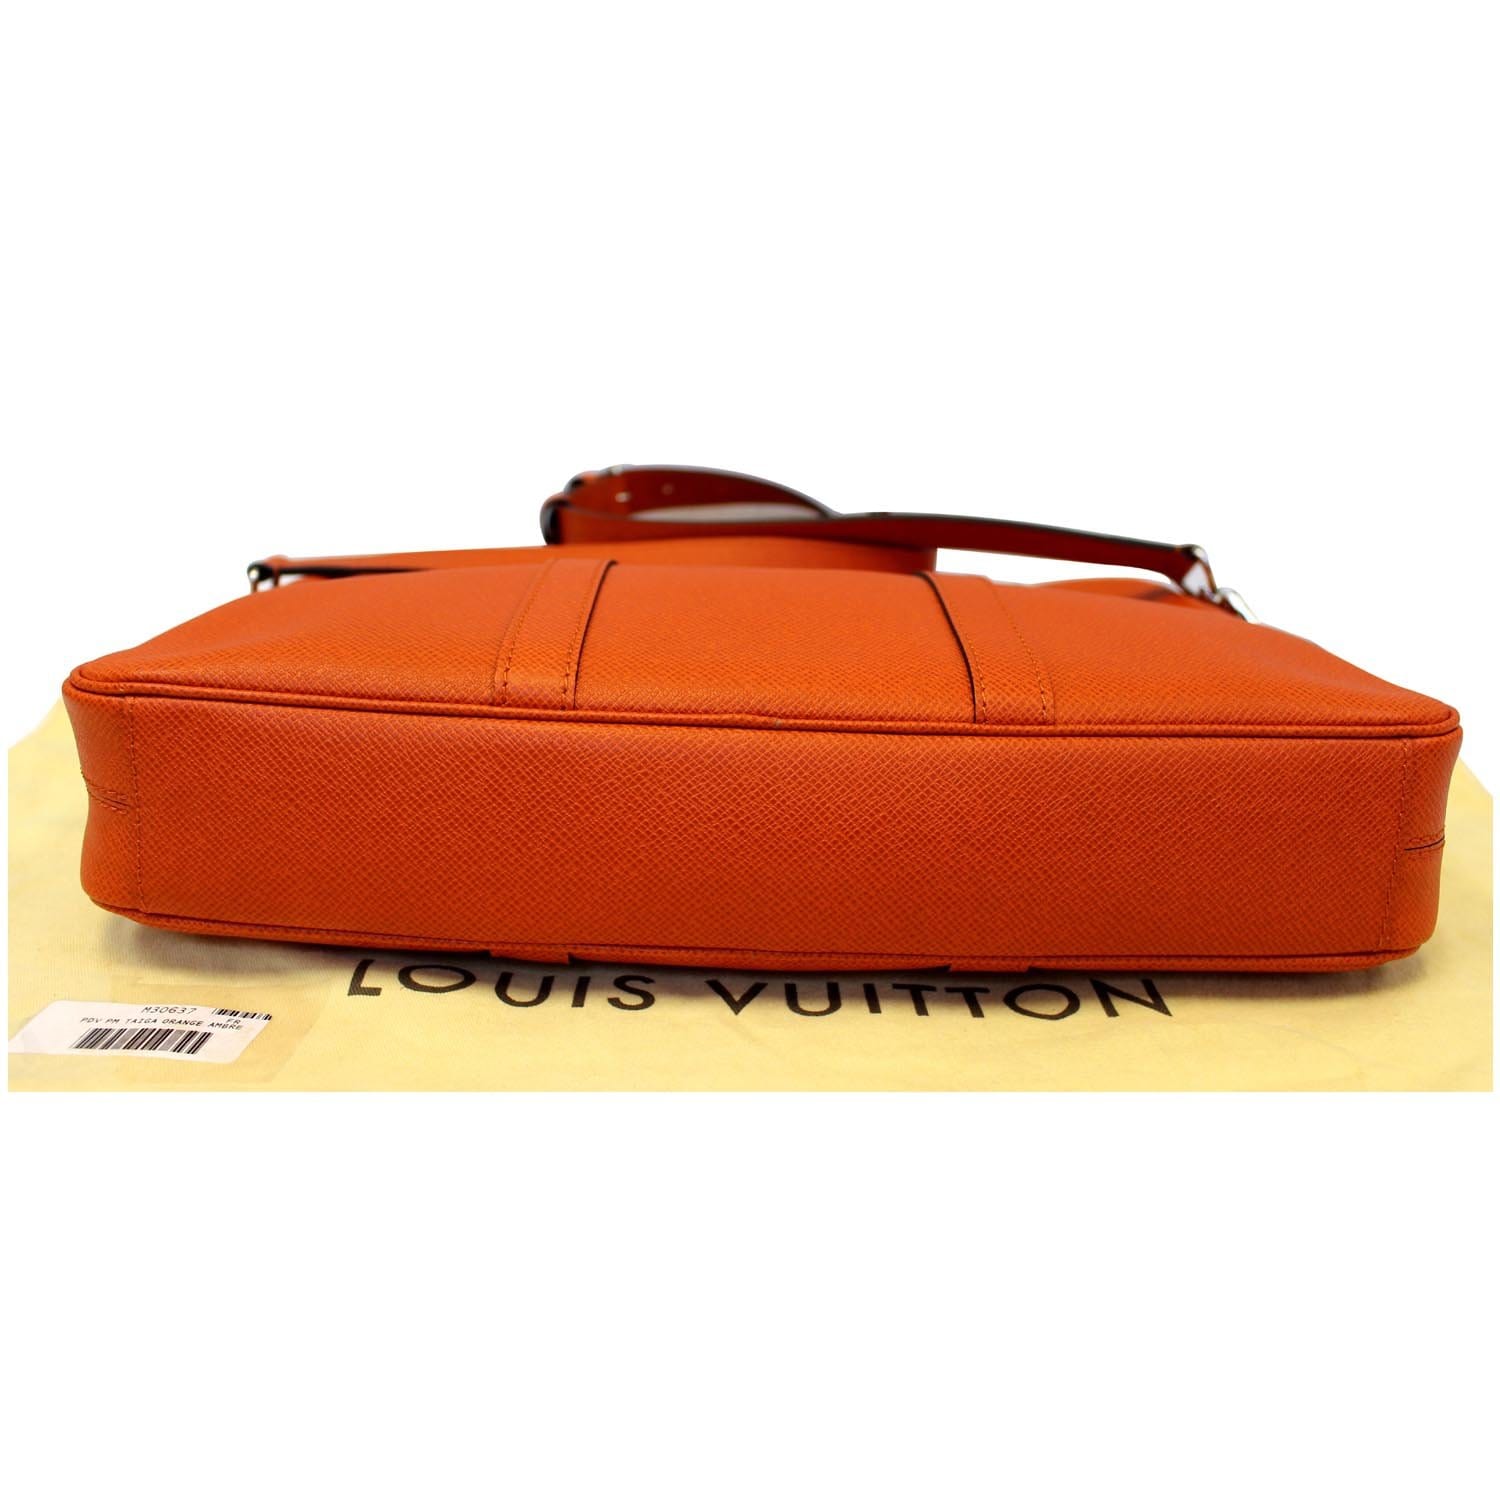 Louis Vuitton - Authenticated Passport Cover Small Bag - Leather Orange Plain for Men, Never Worn